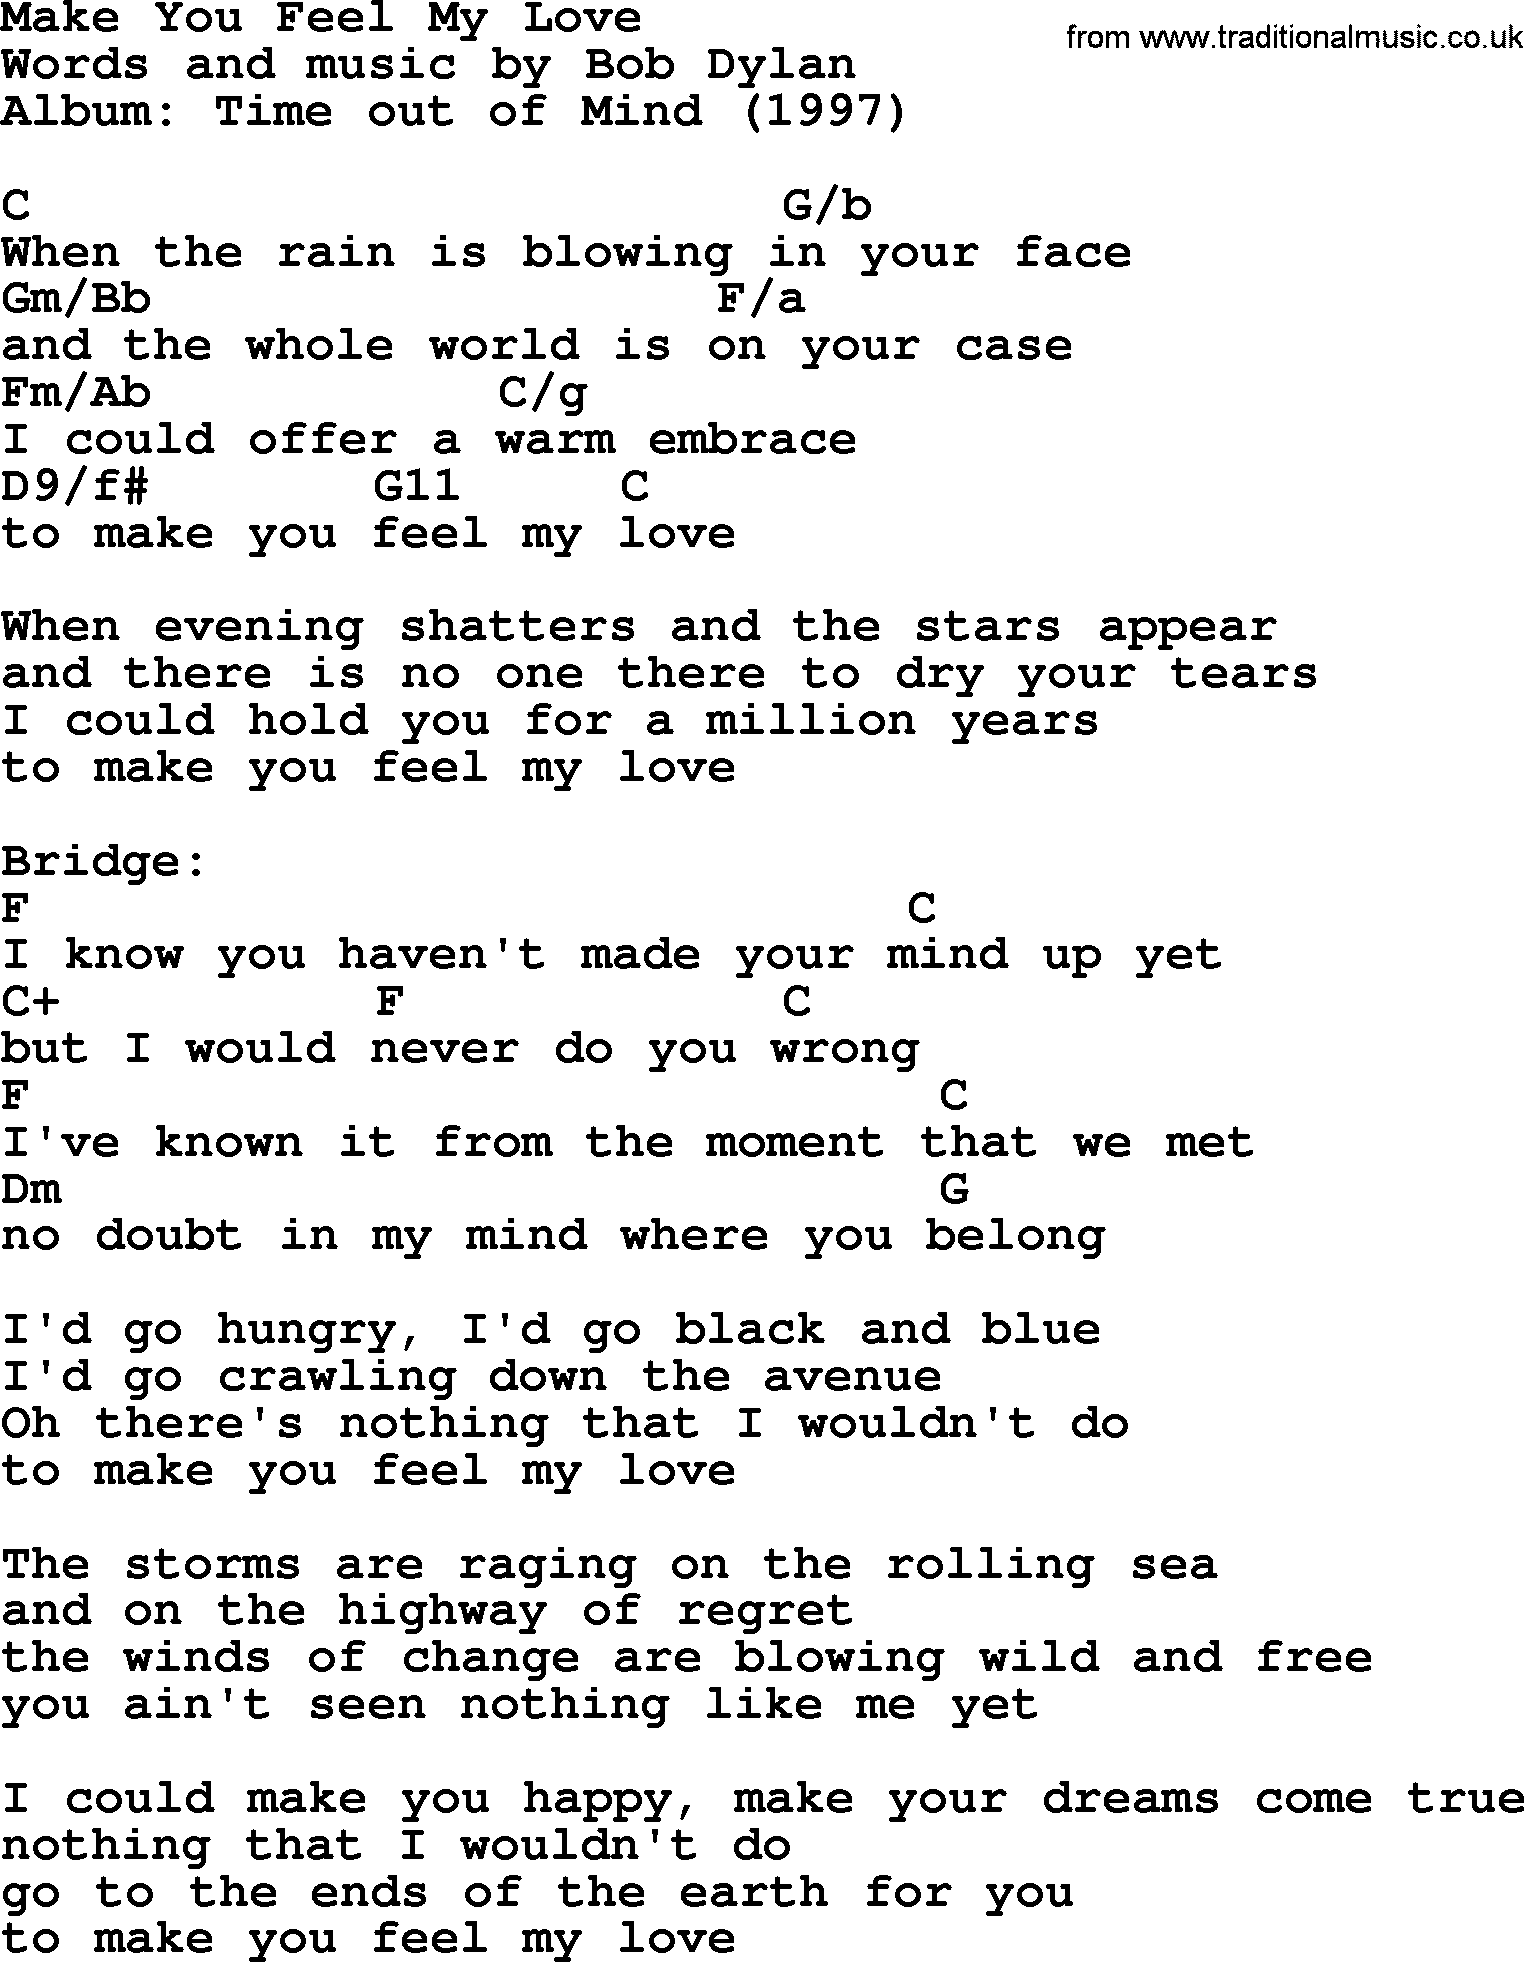 Bob Dylan song, lyrics with chords - Make You Feel My Love